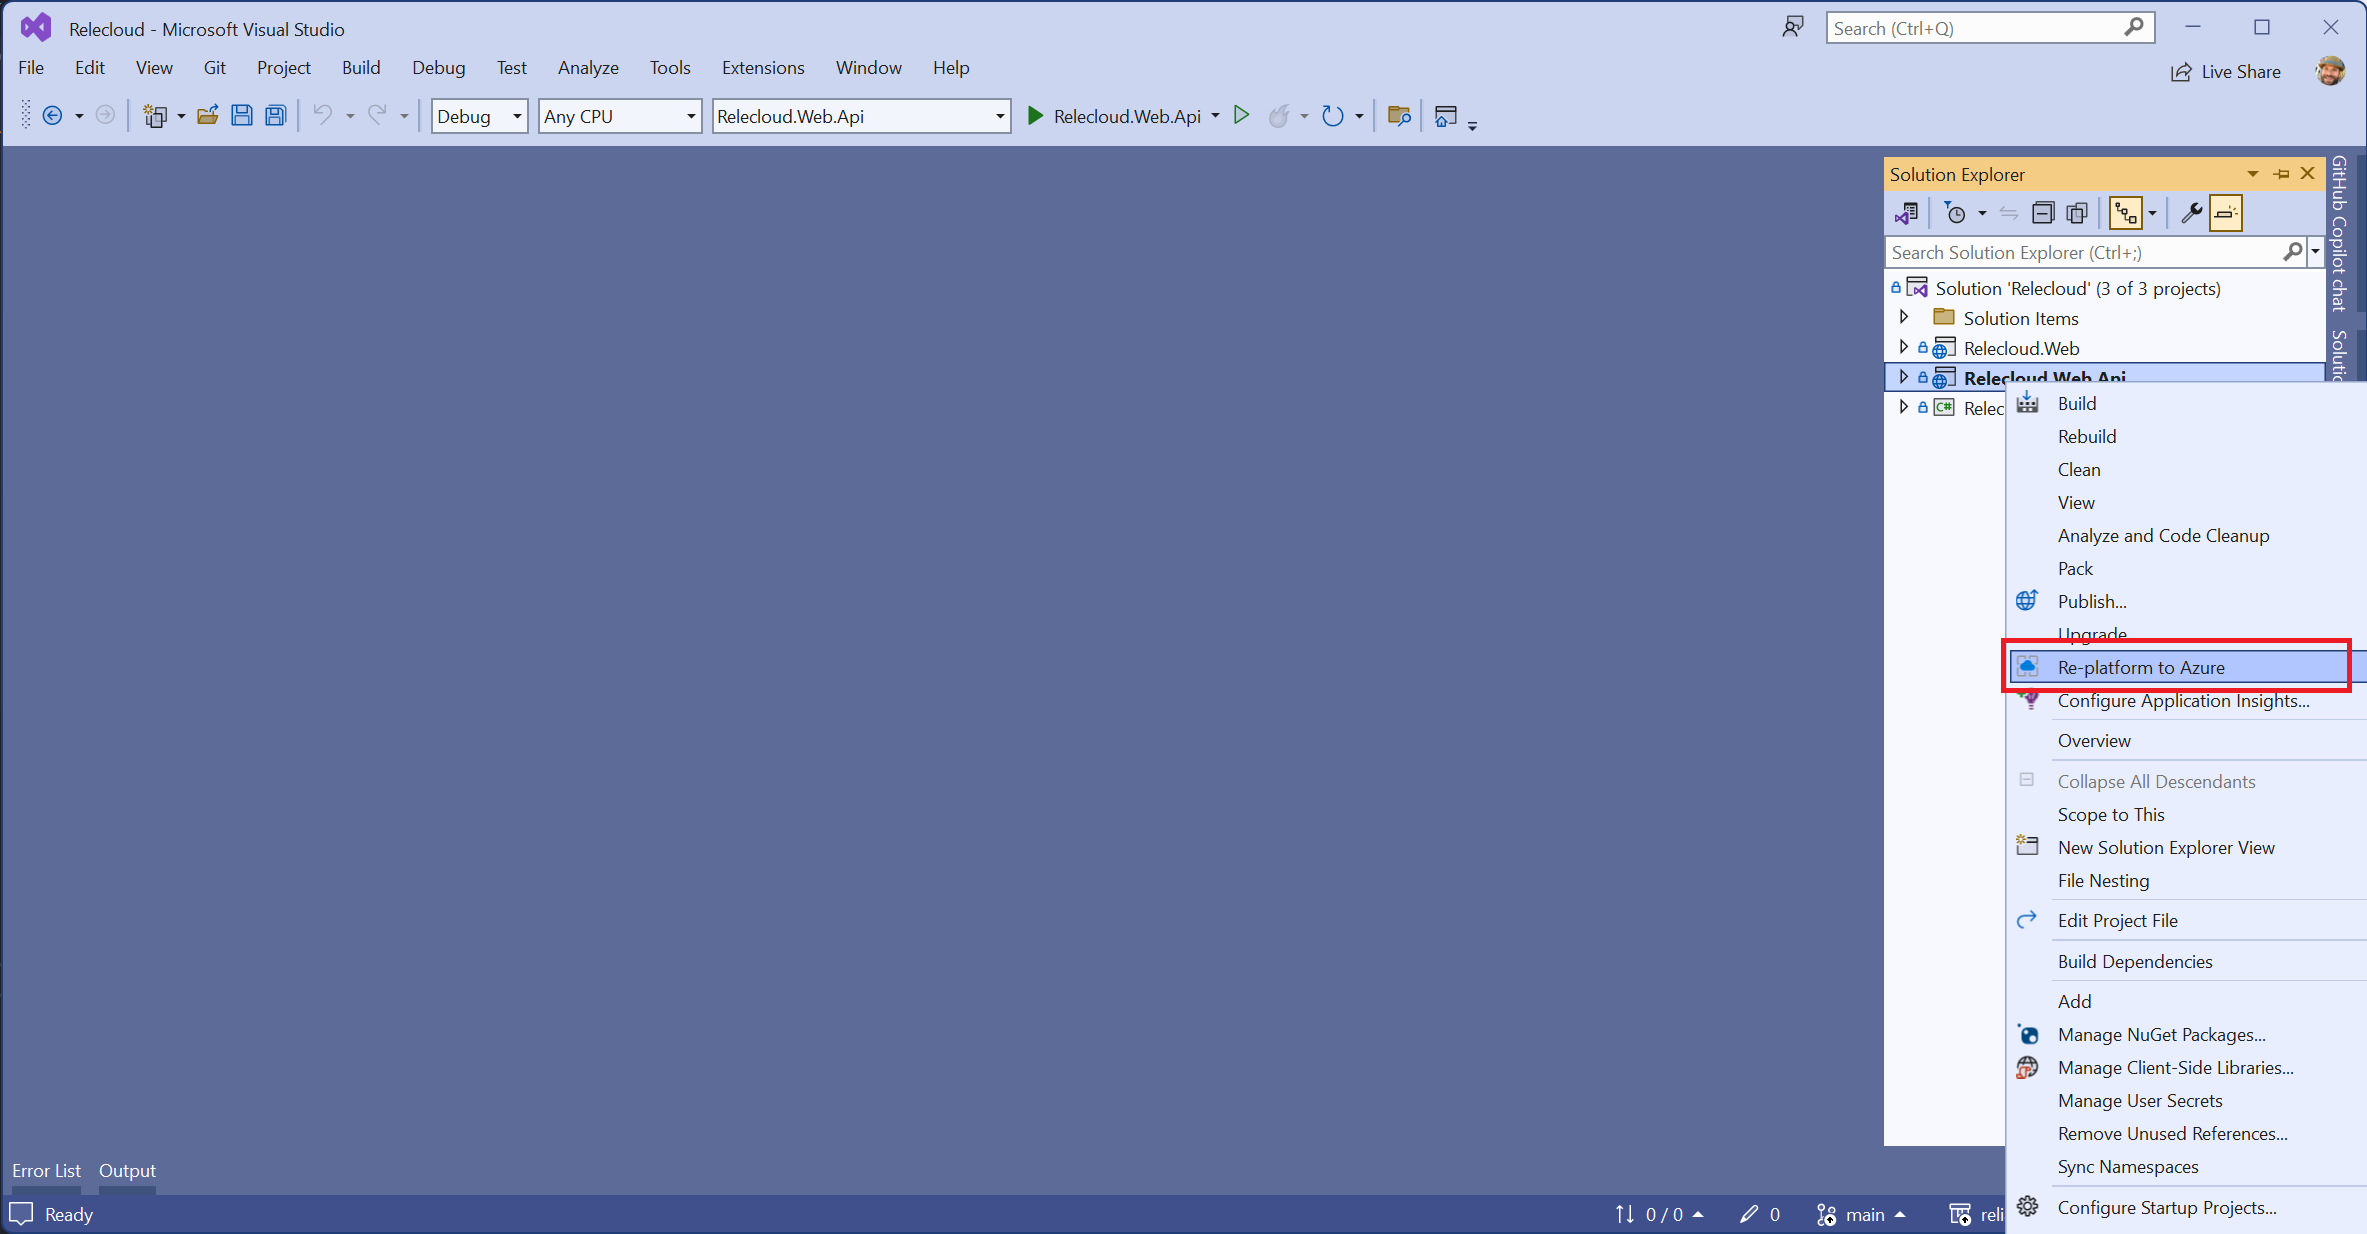 Screenshot of the Re-platform to Azure menu item in Visual Studio